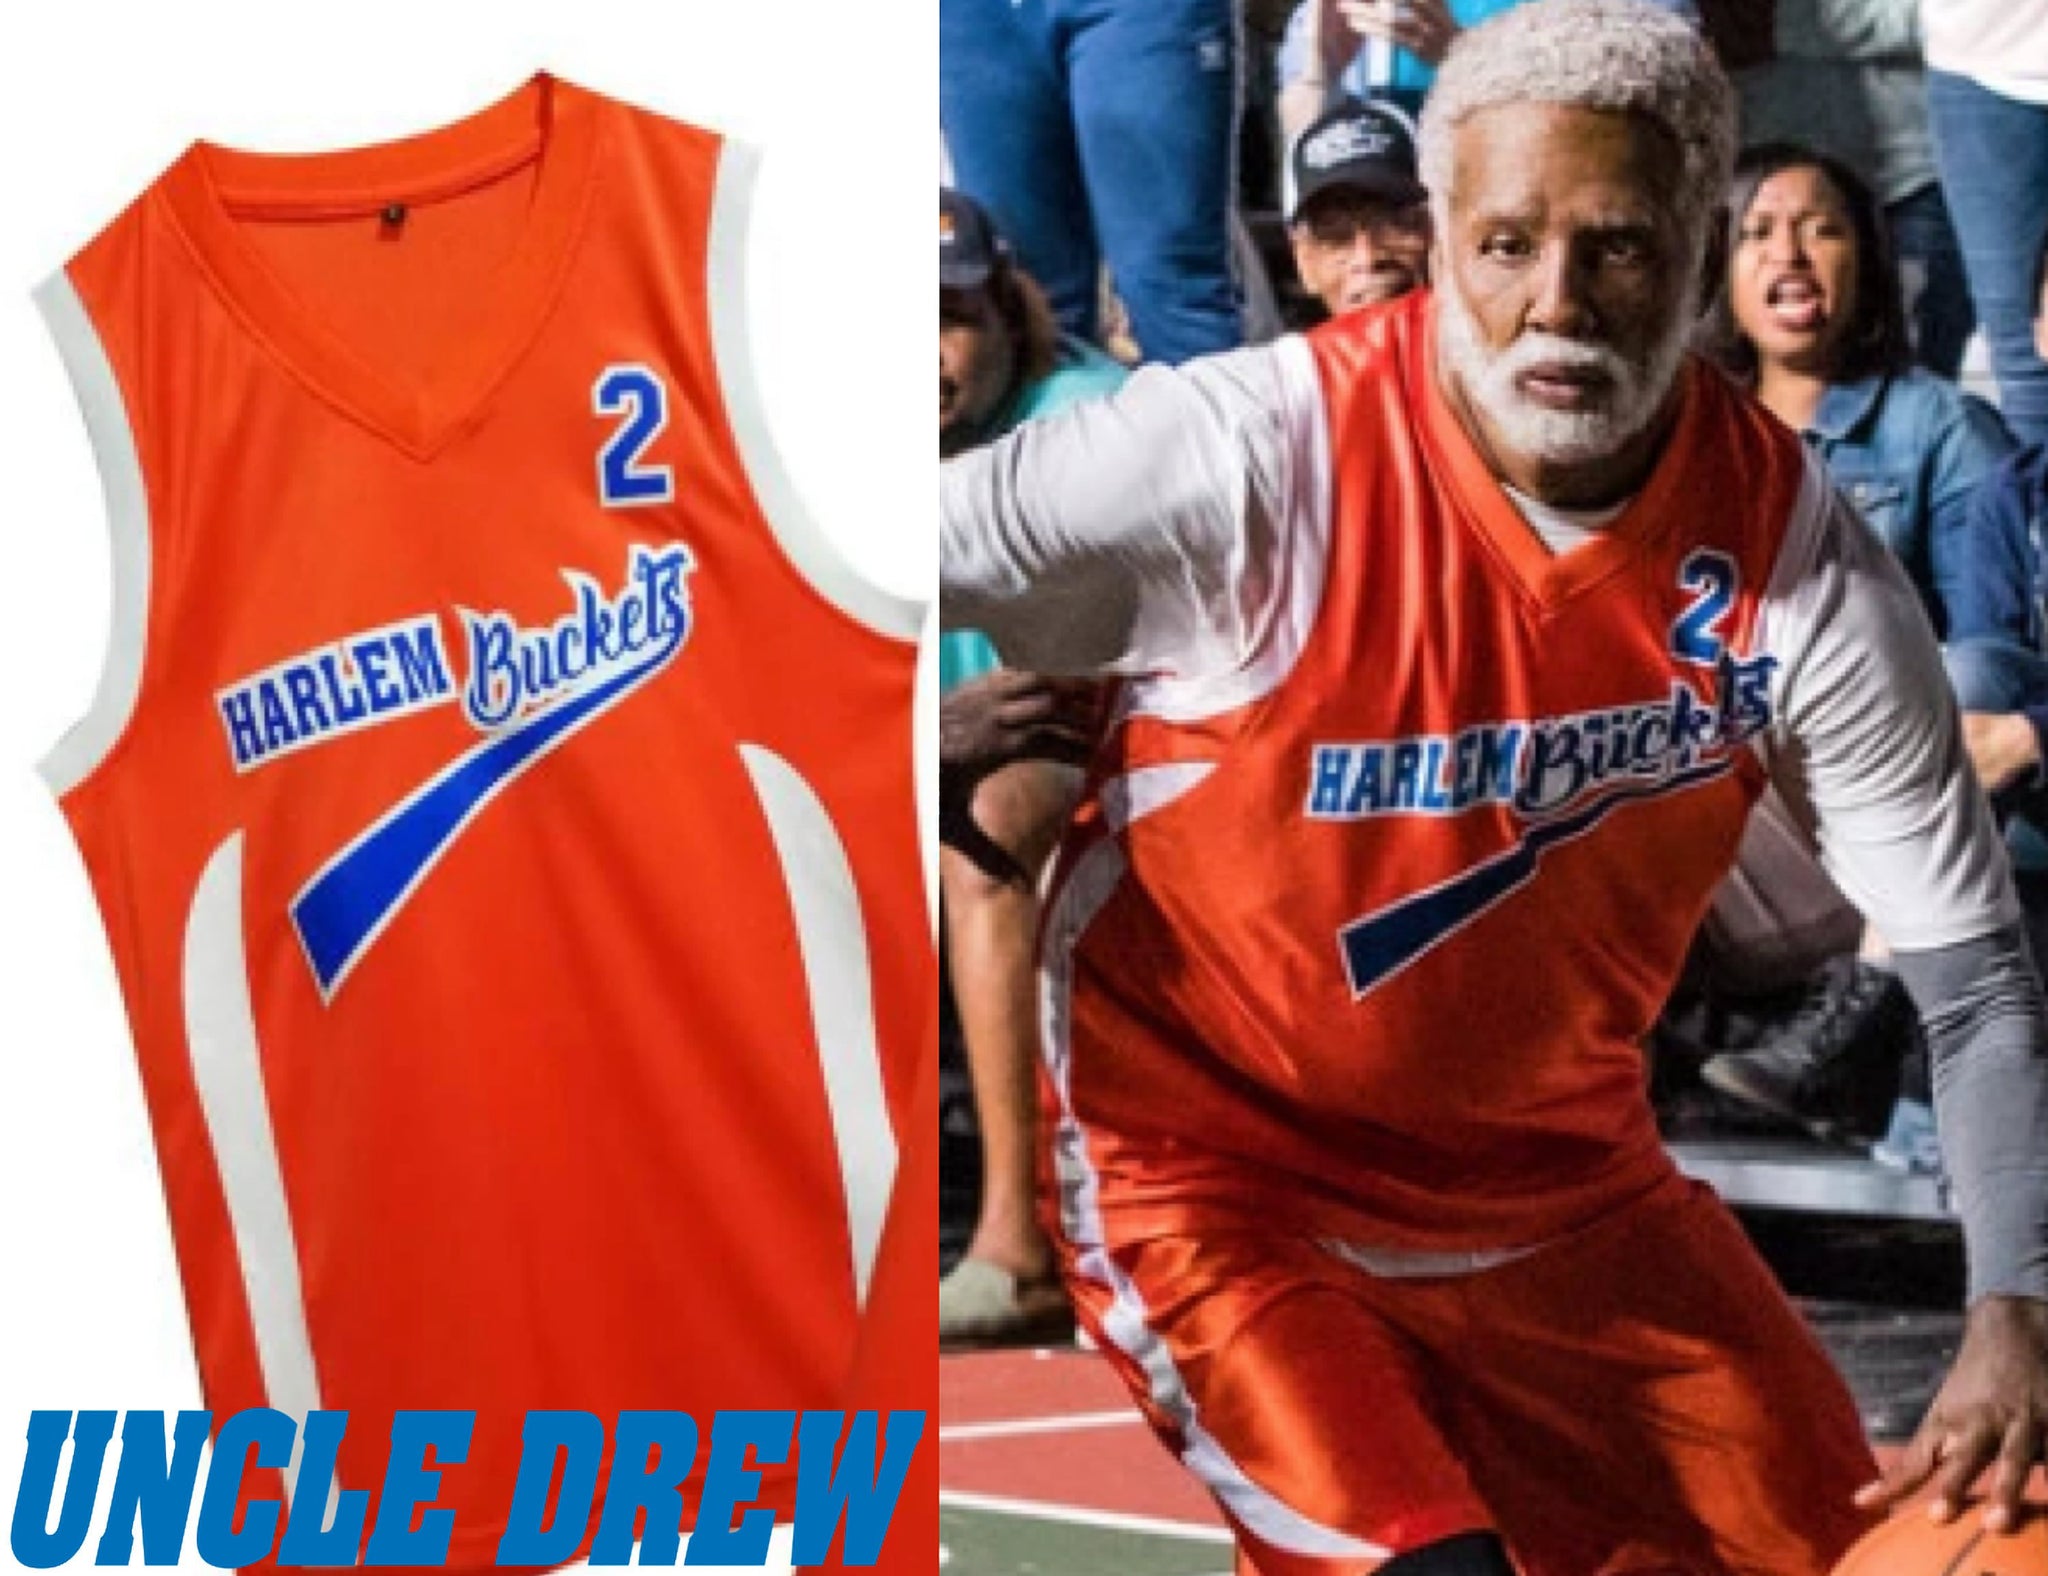 Uncle Drew Harlem Buckets Basketball Jersey Movie Costume Uniform